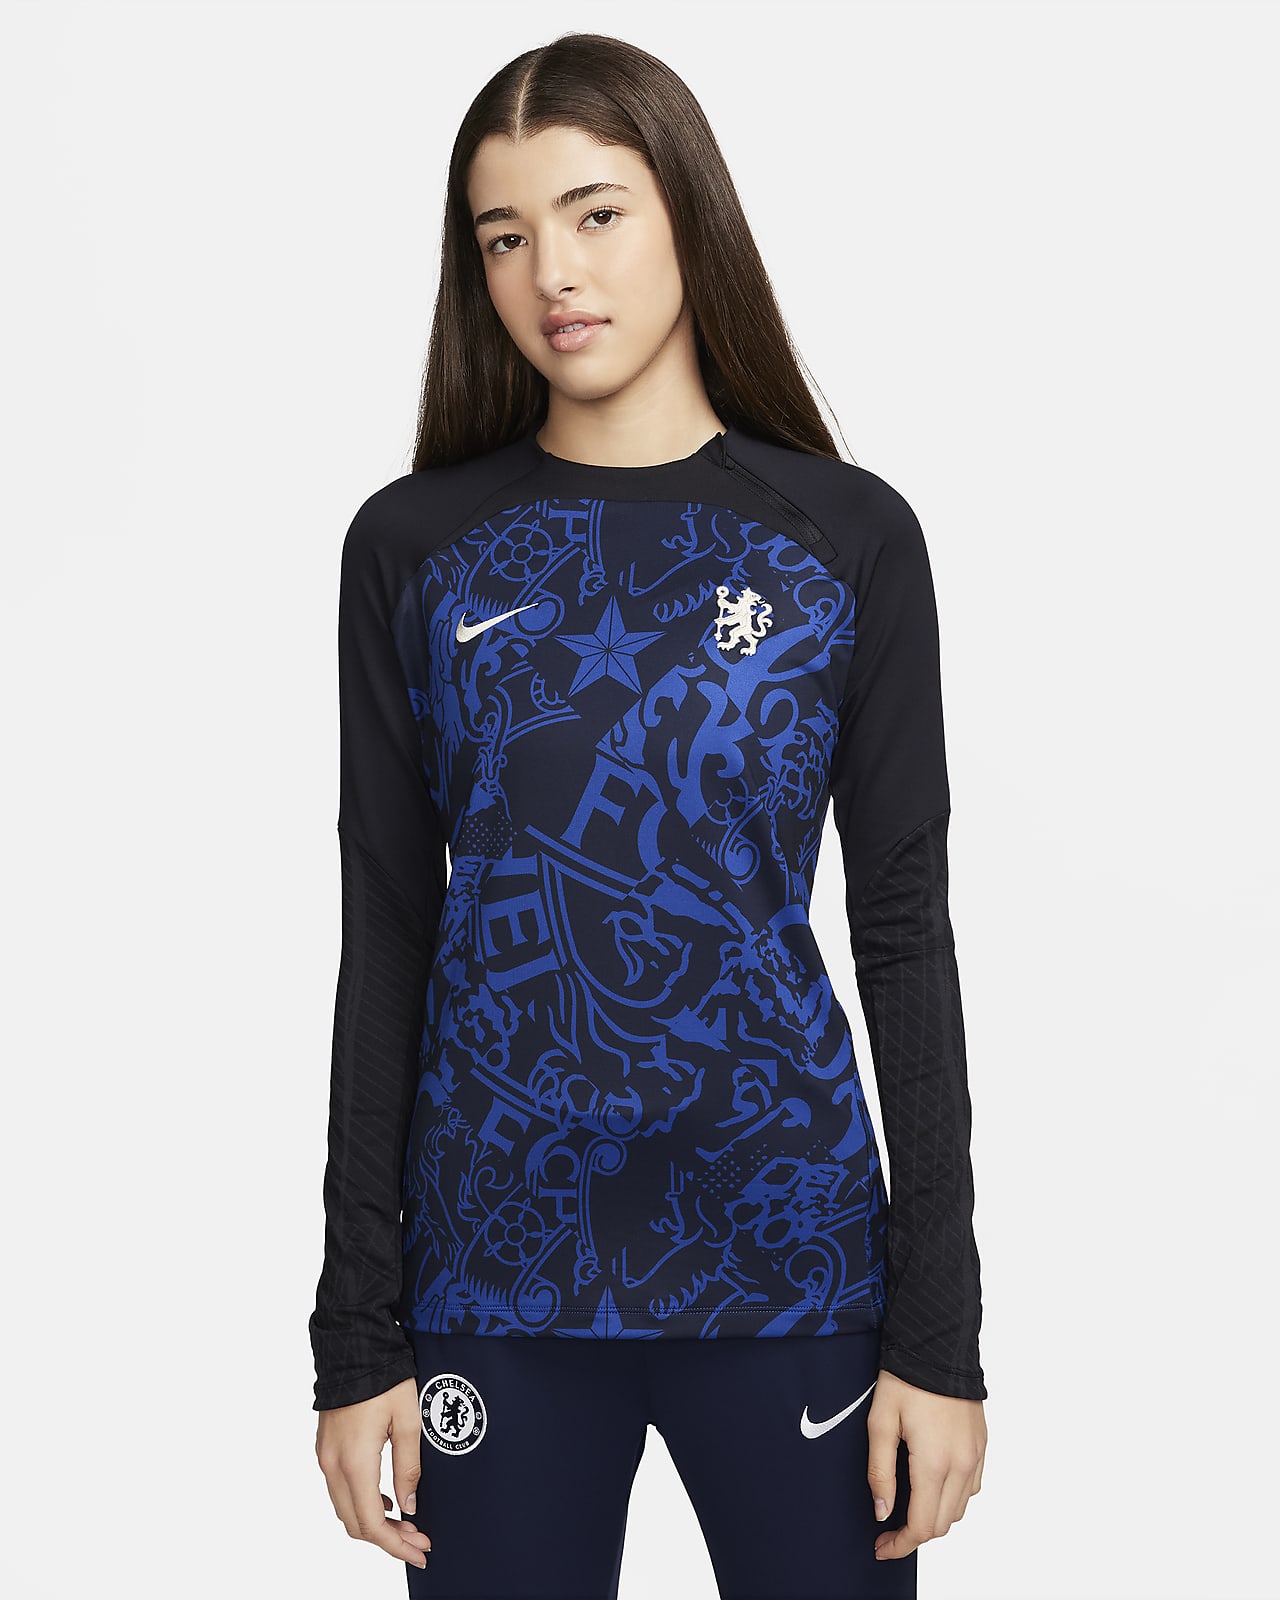 Damska treningowa koszulka piłkarska z półokrągłym dekoltem Nike Dri-FIT Chelsea F.C. Strike